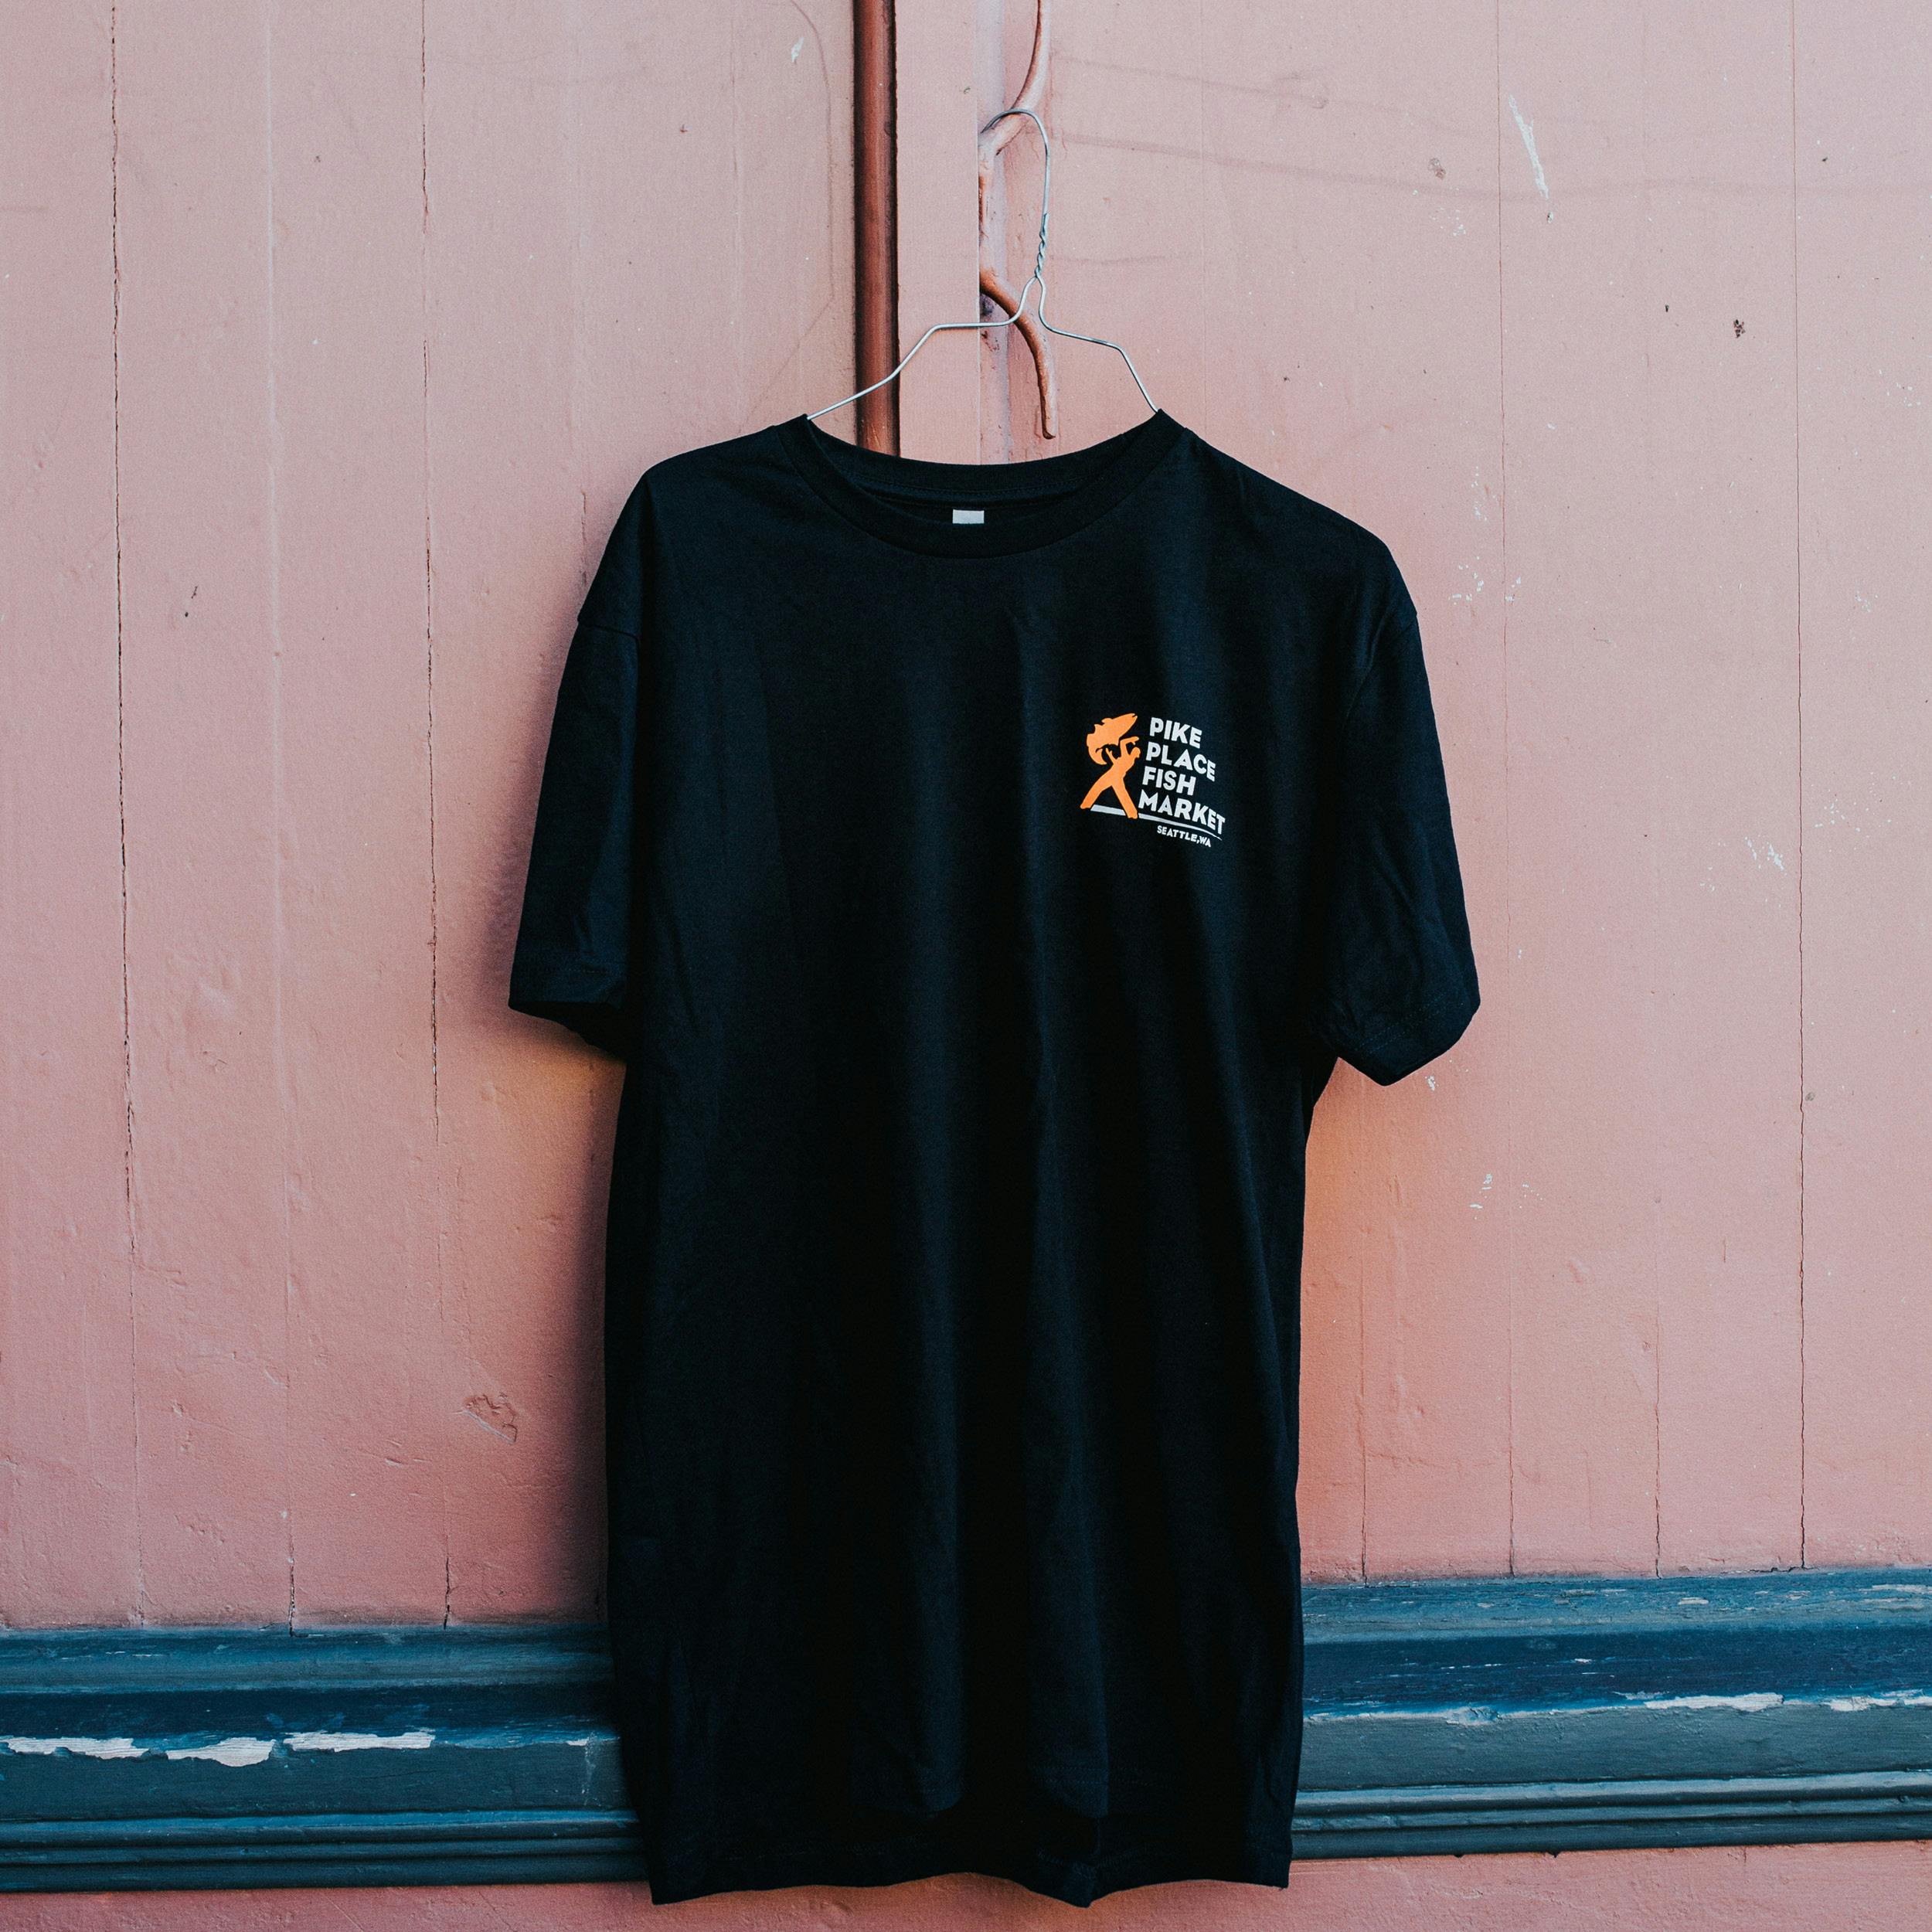 Pike Place Fish T-Shirt